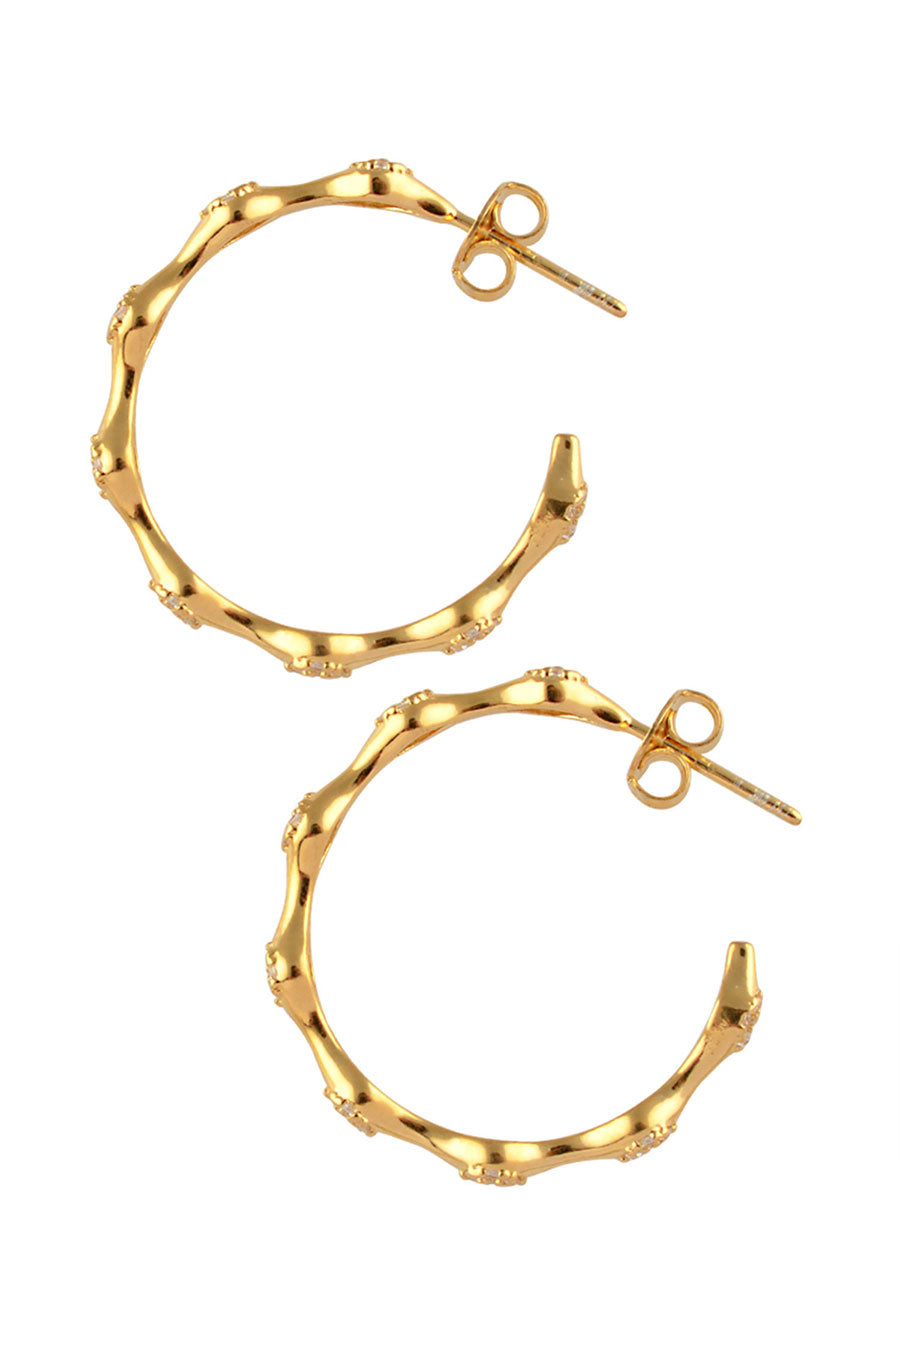 Enchnated Infinity Golden Hoop Earrings